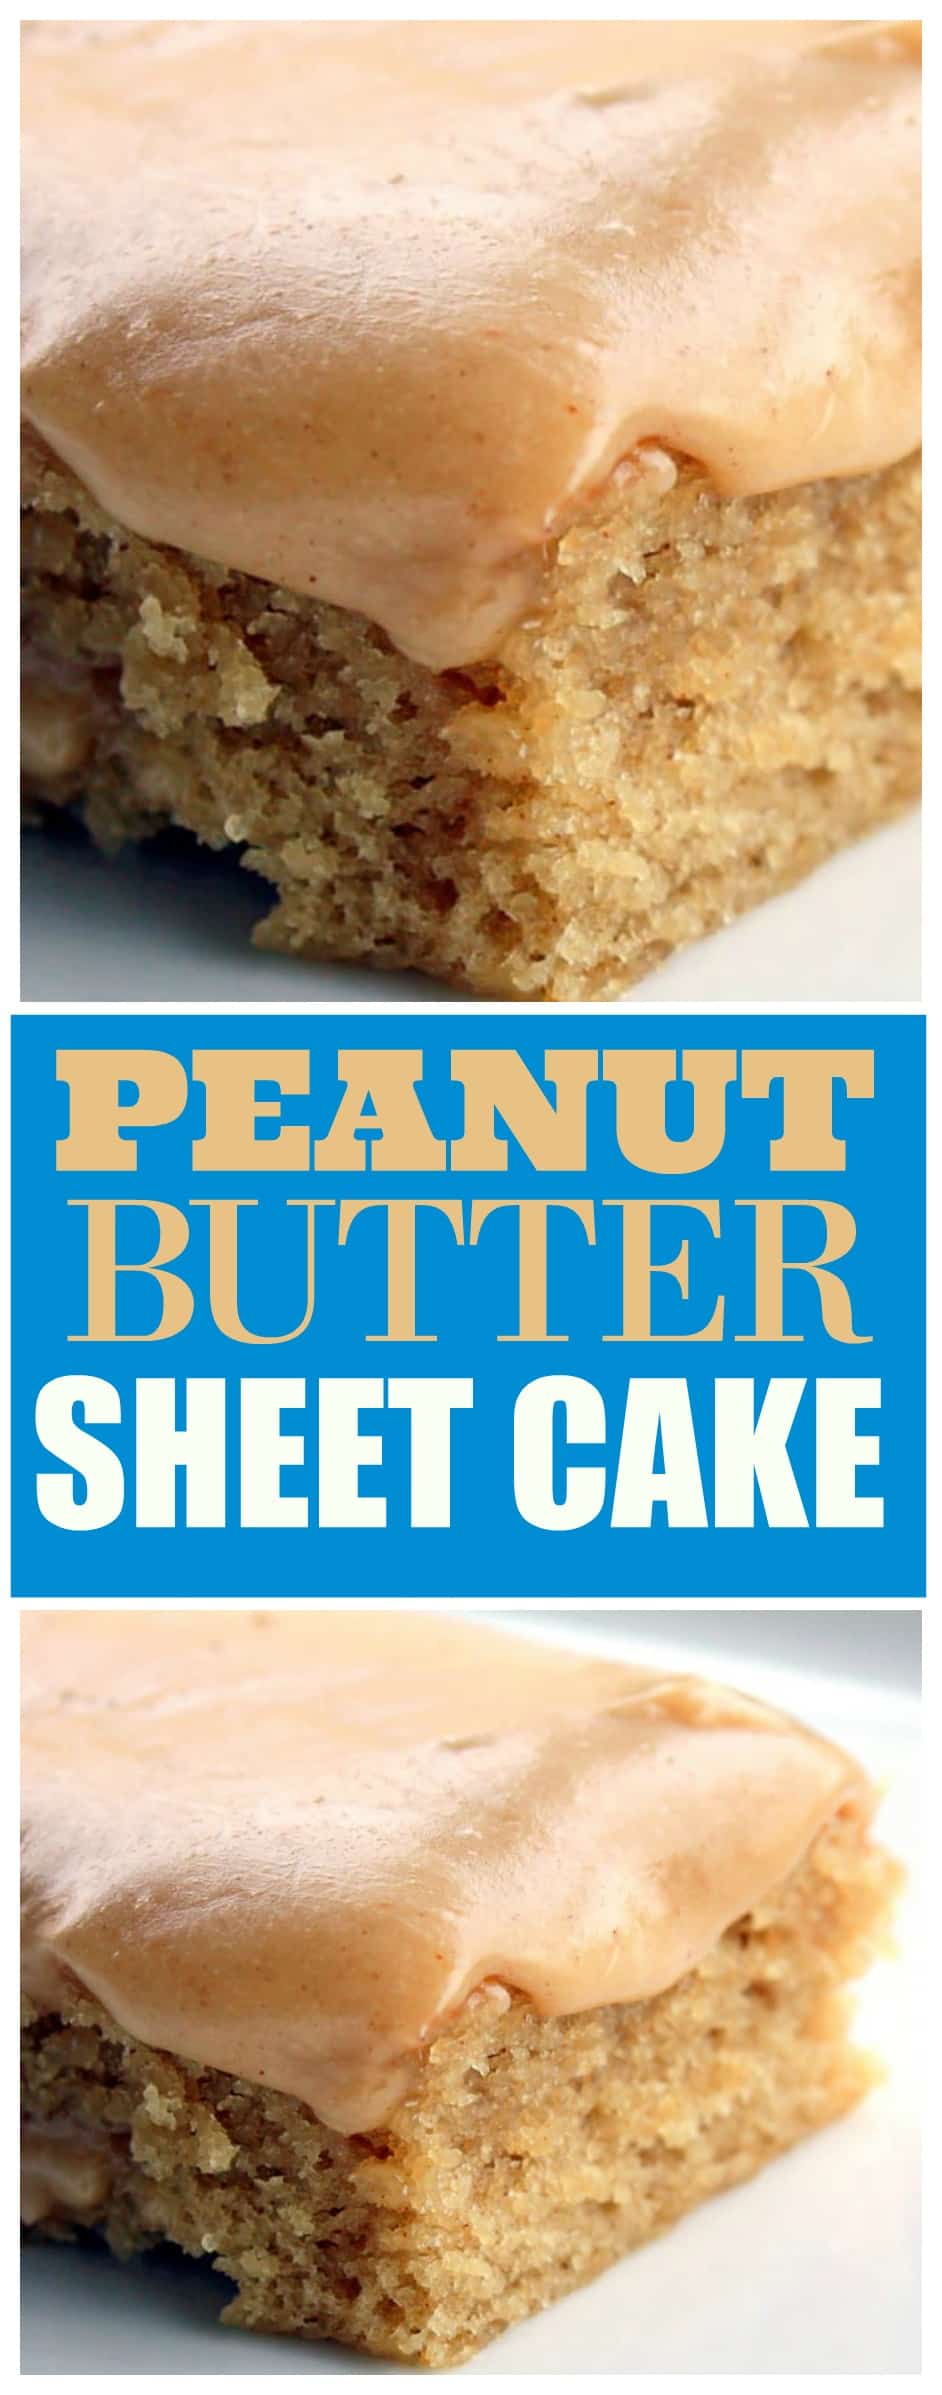 This Peanut Butter Sheet Cake is a moist sheet cake topped with a gooey peanut butter glaze. Peanut butter lovers, this is your dessert! #peanut #butter #cake #recipe #sheet